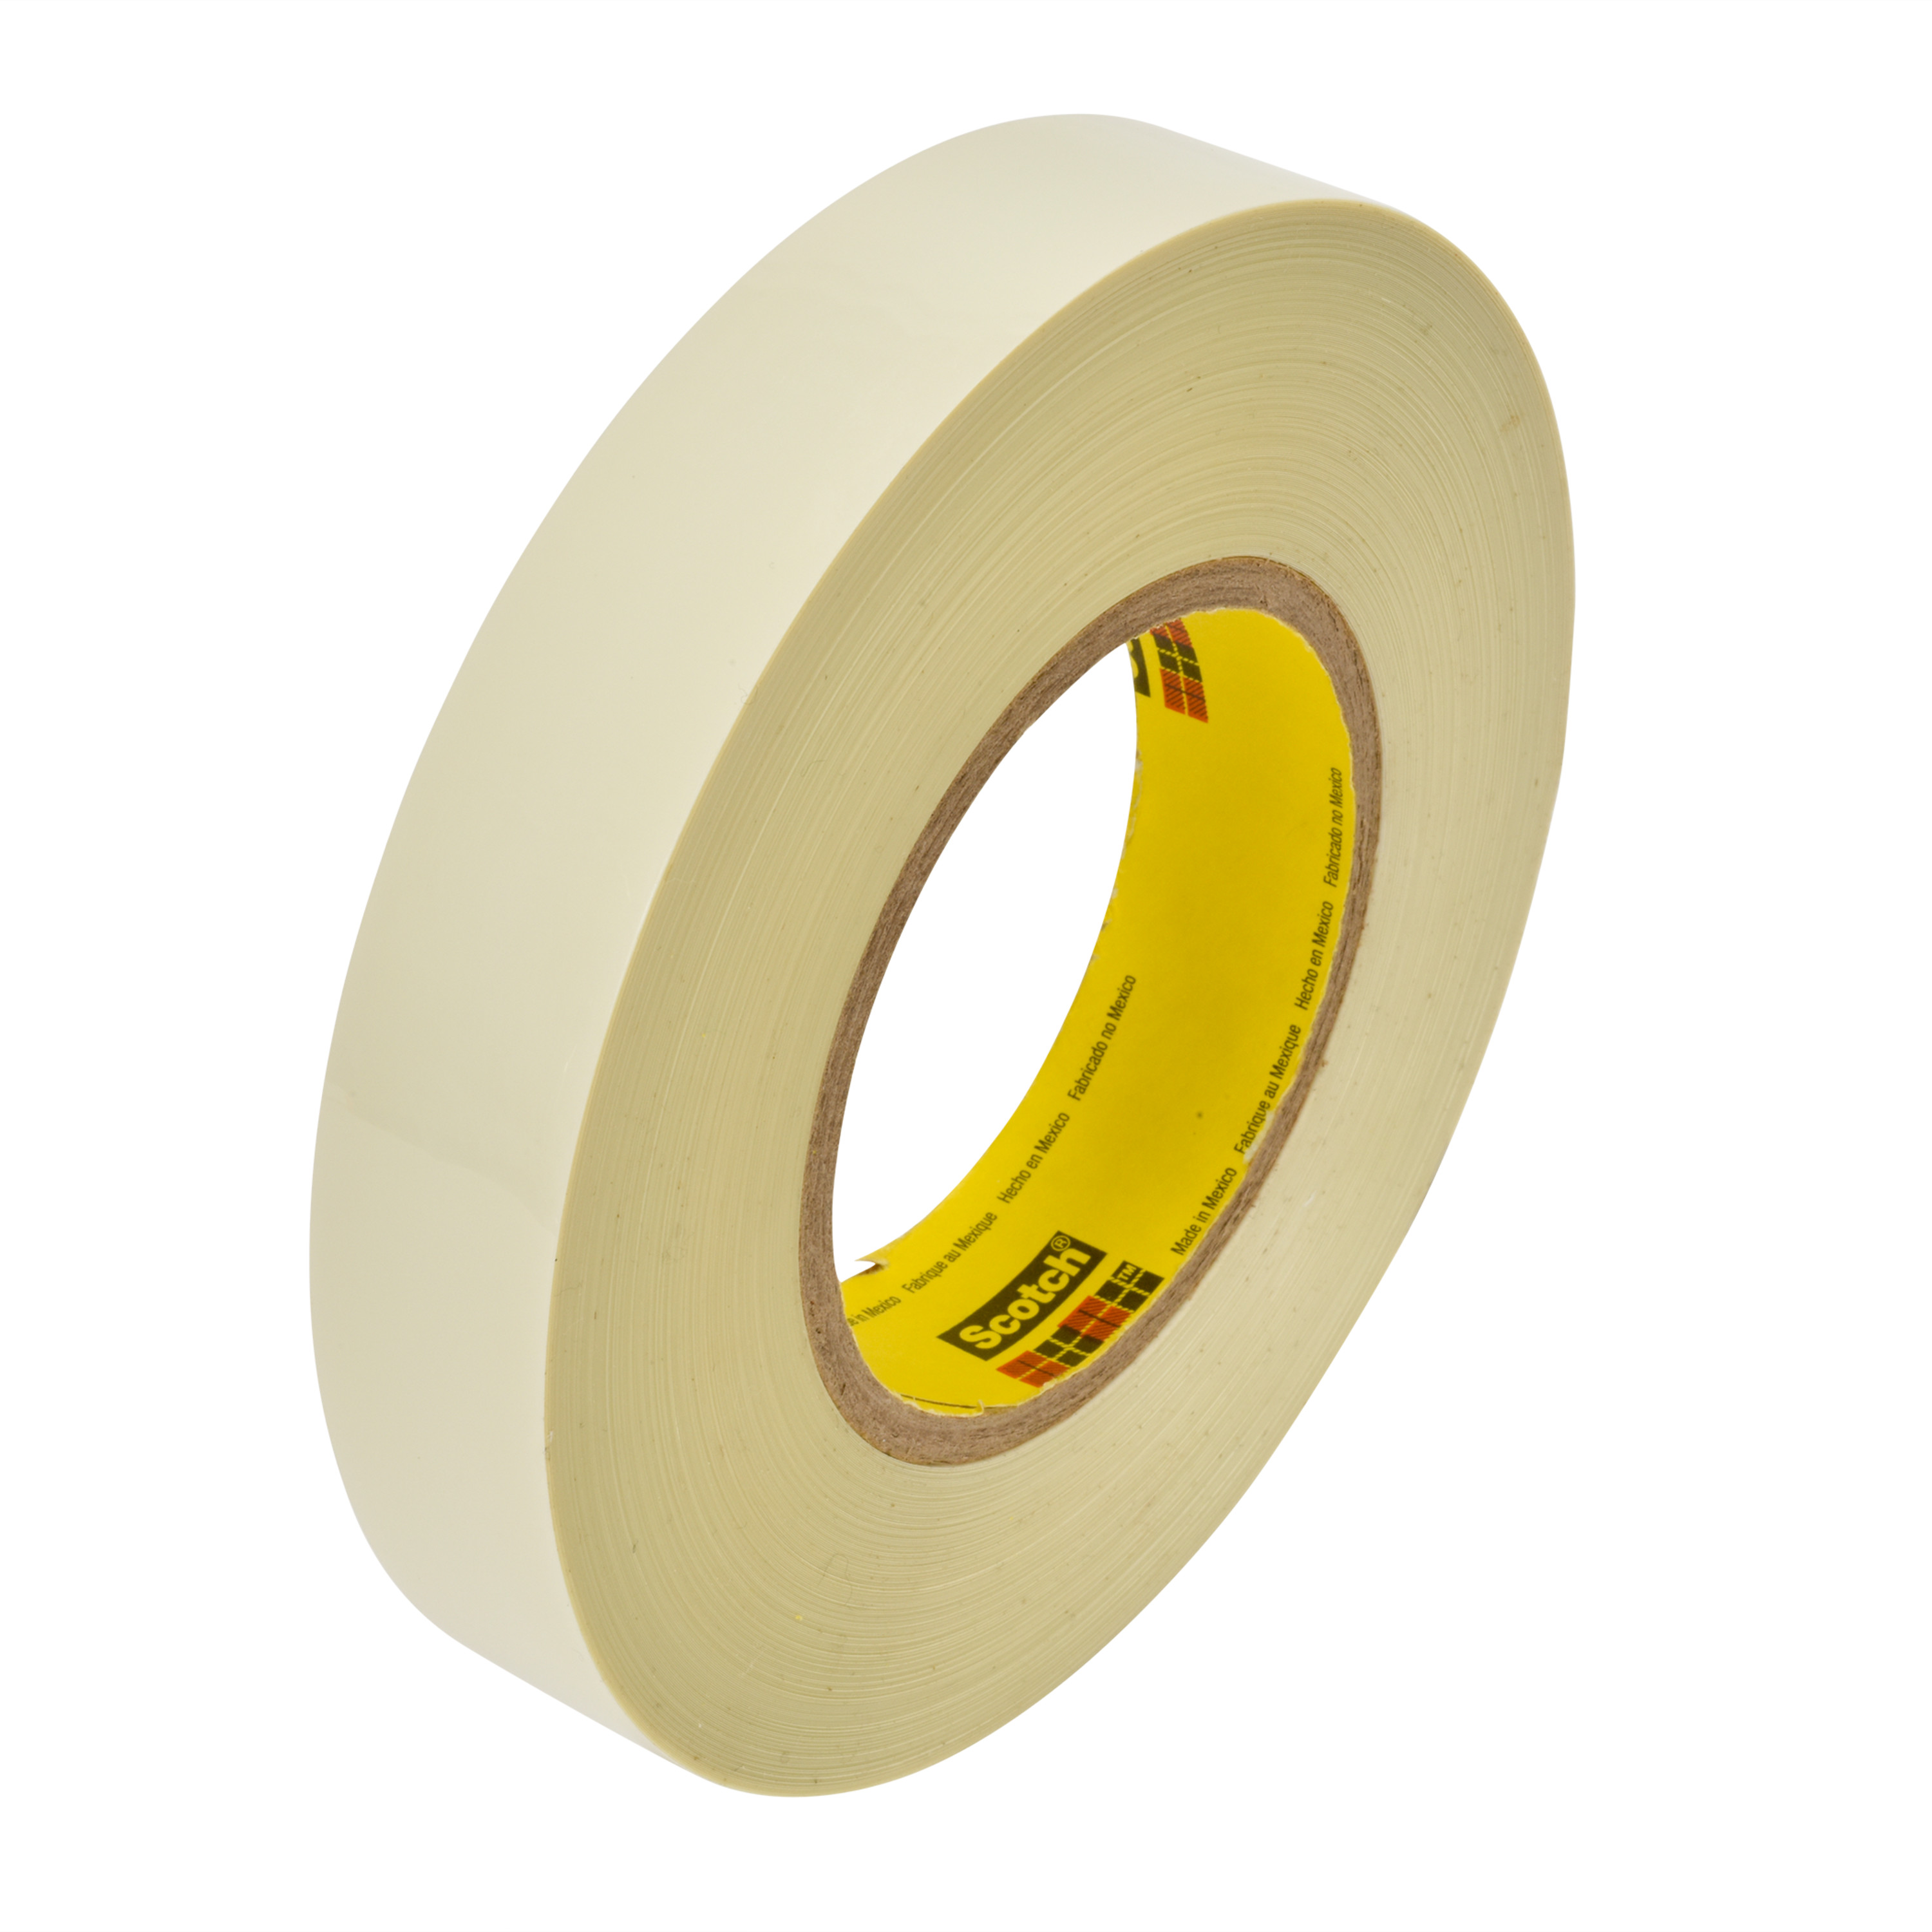 3M™ High Temperature Nylon Film Tape 8555, White, 1/2 in x 72 yd, 7 mil,
72 rolls per case